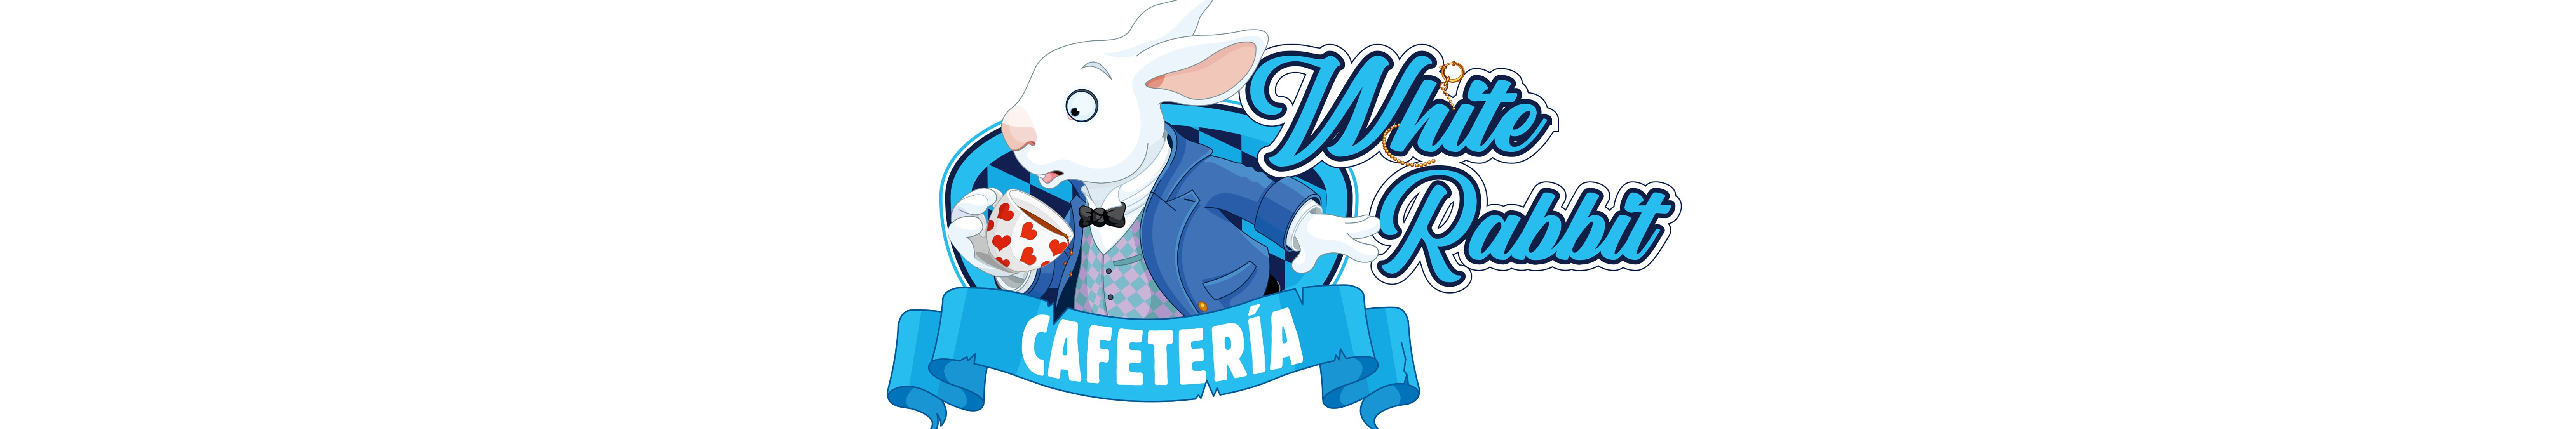 White Rabbit - Праздники, Мероприятия